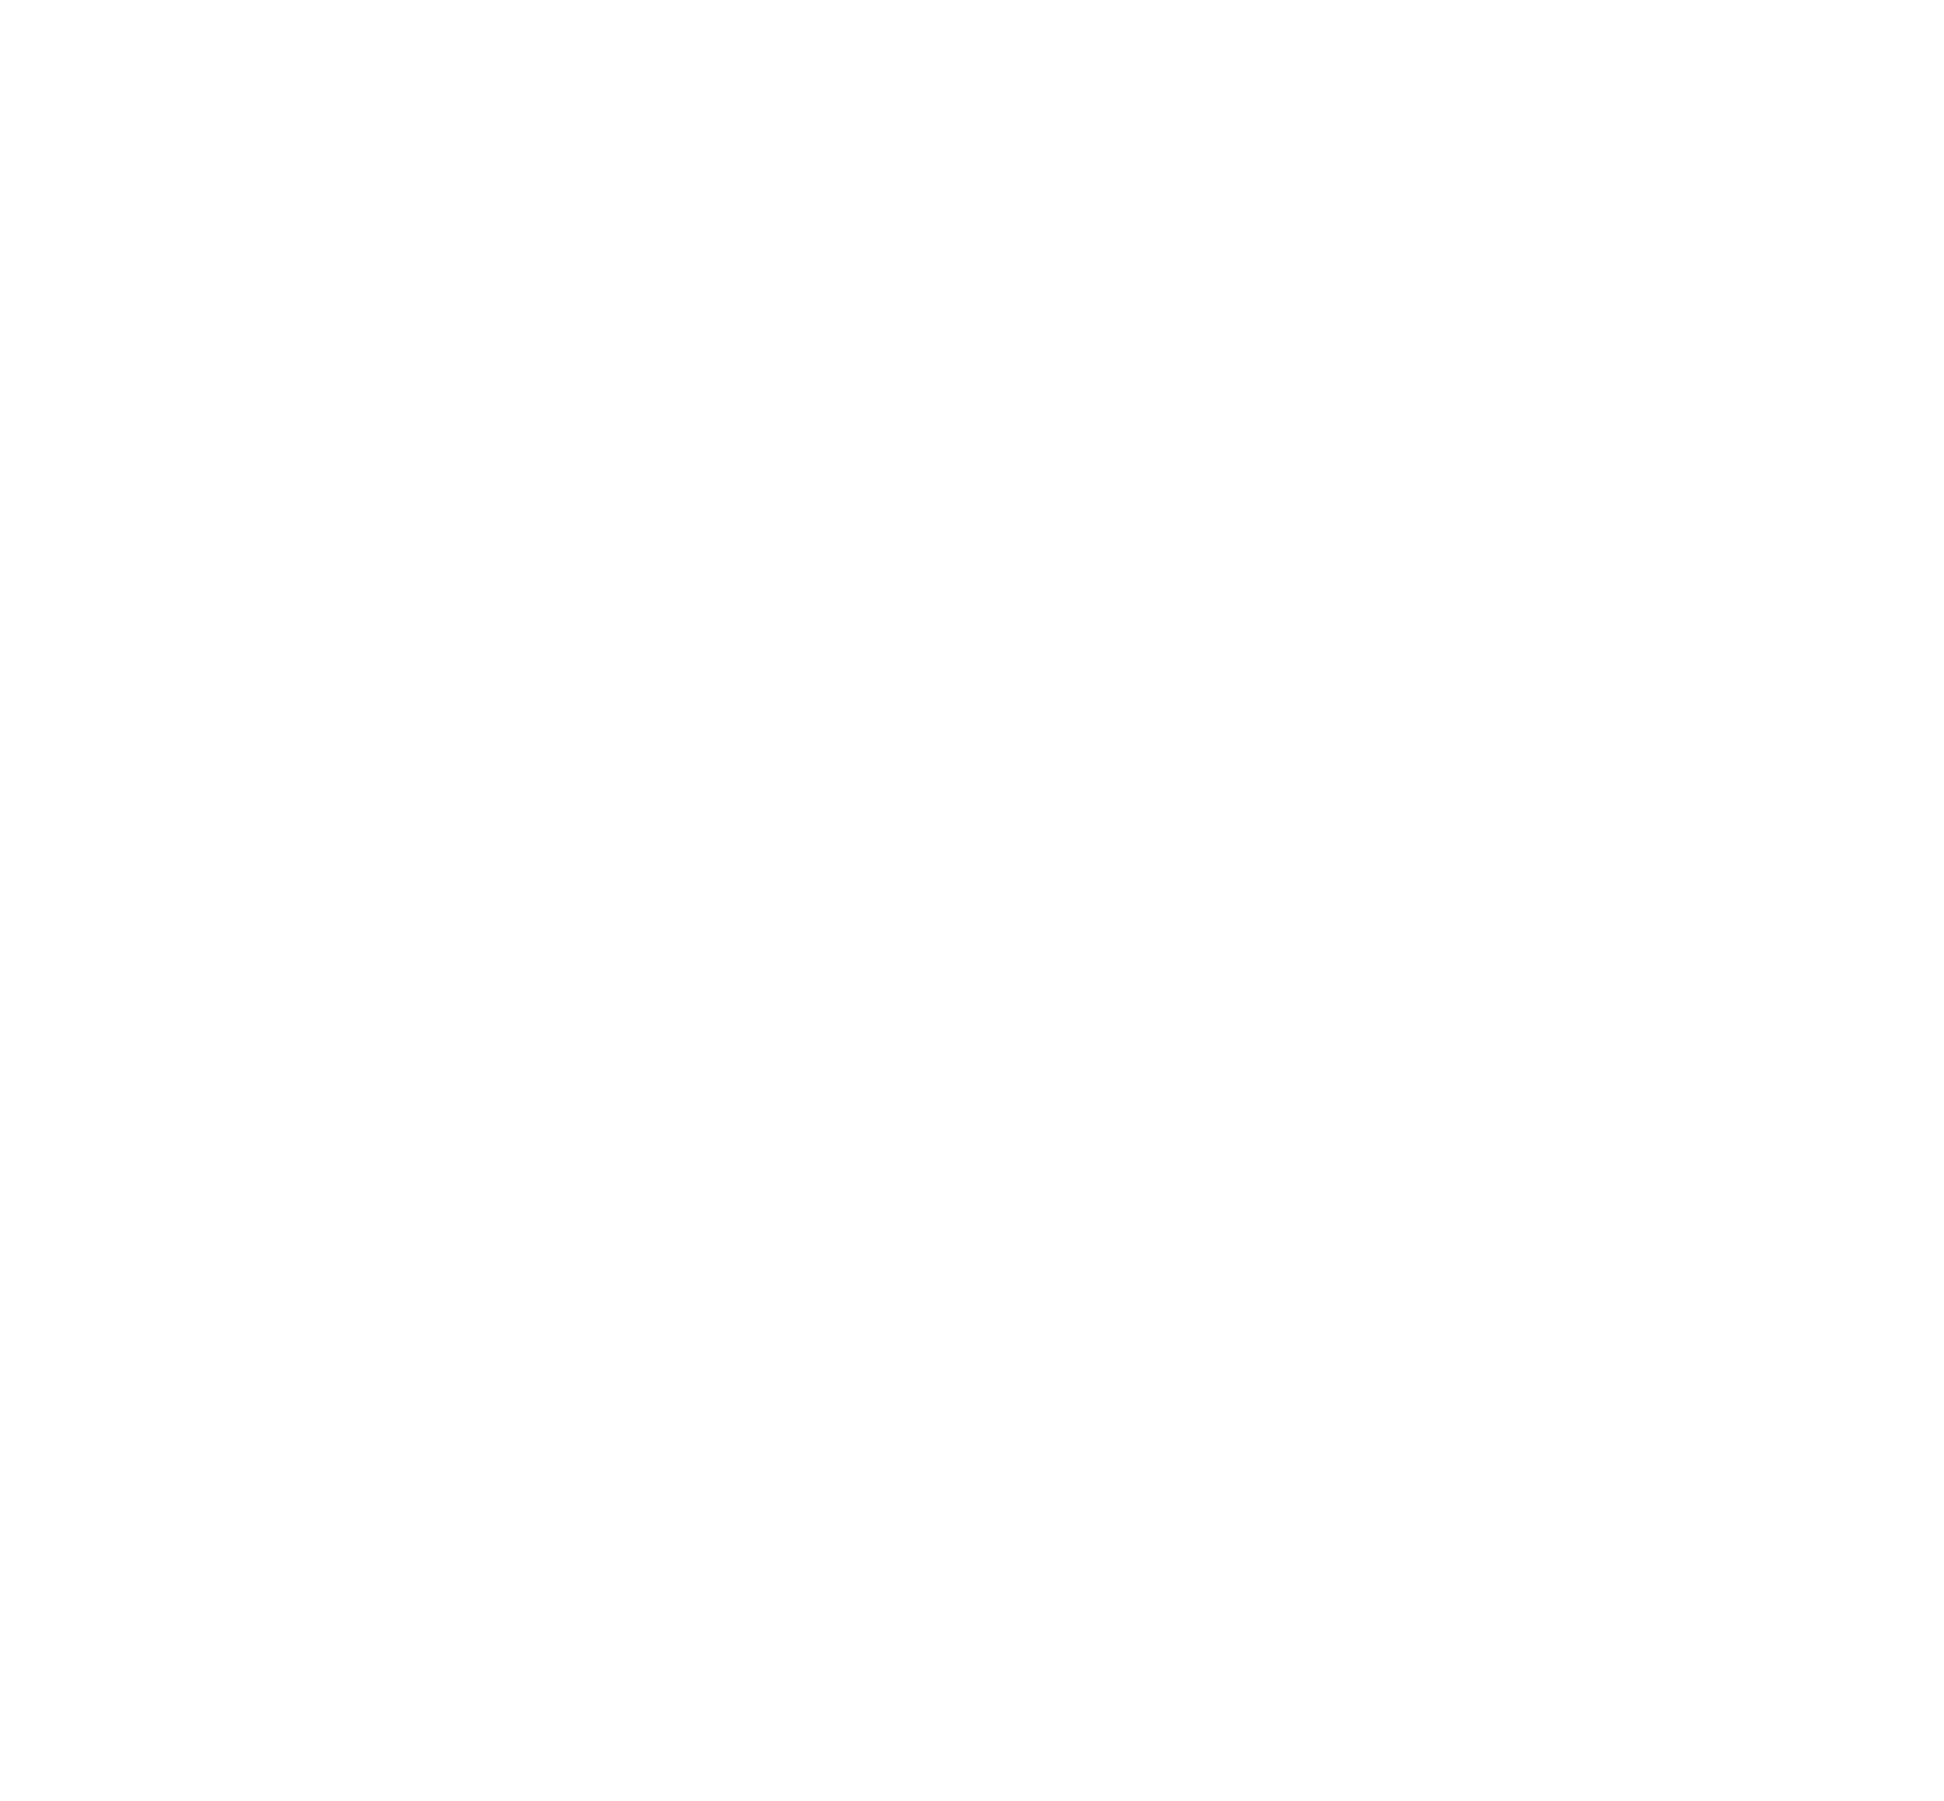 Old Dickies Logo - Home